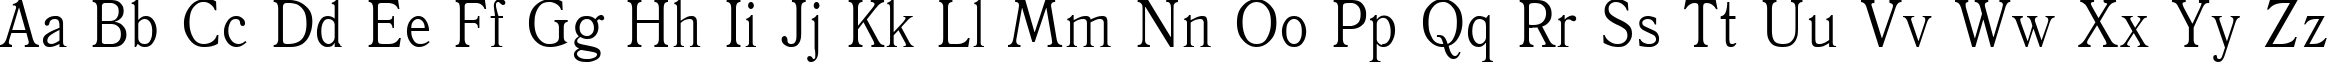 Пример написания английского алфавита шрифтом Antiqua90n